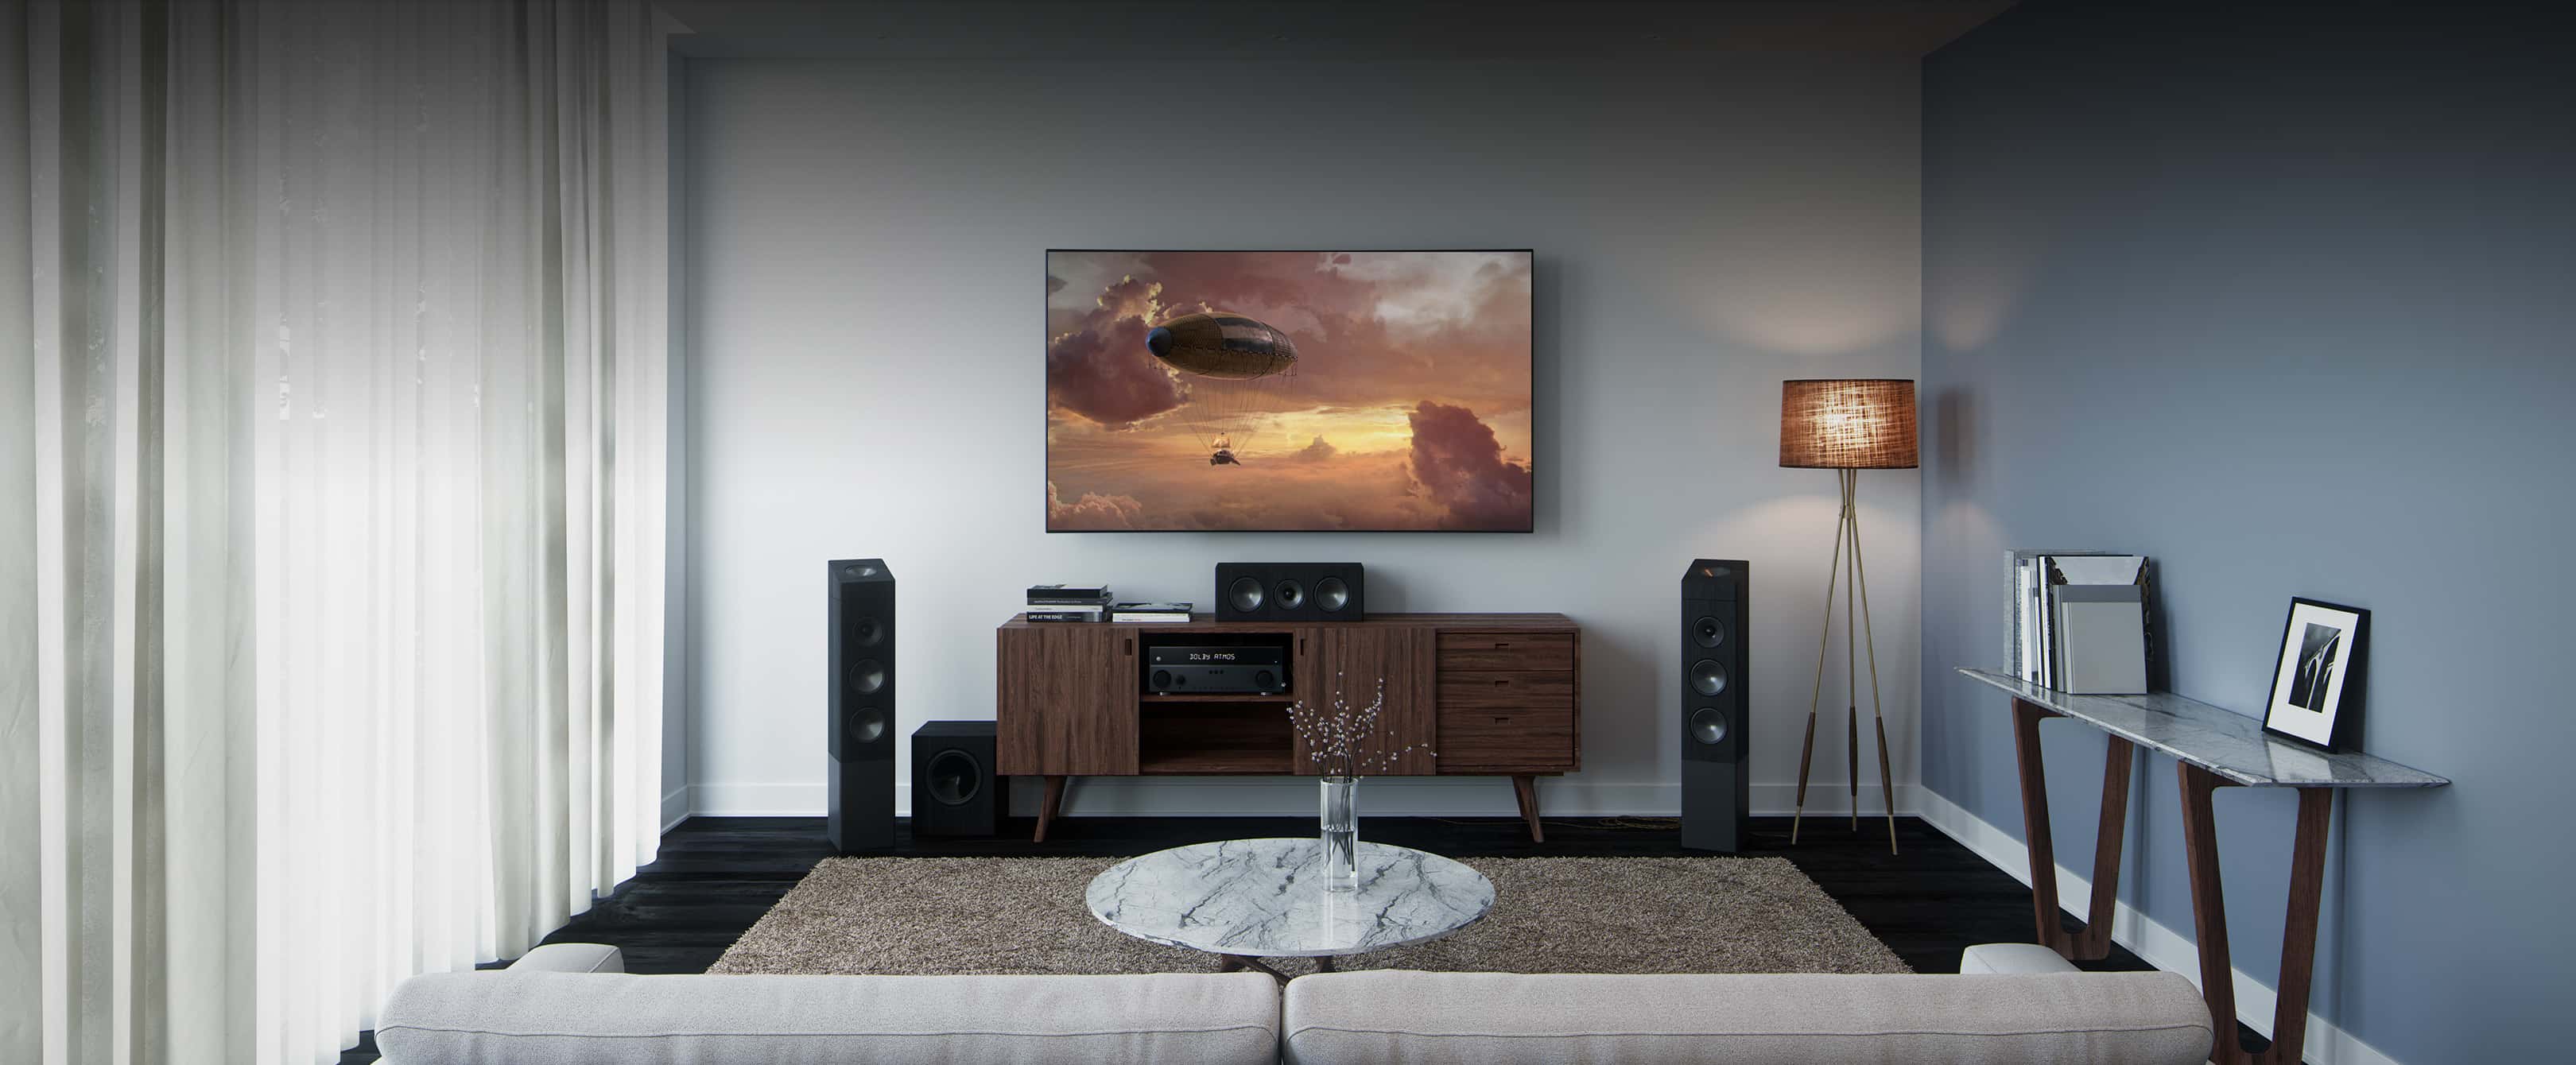 home speaker installation